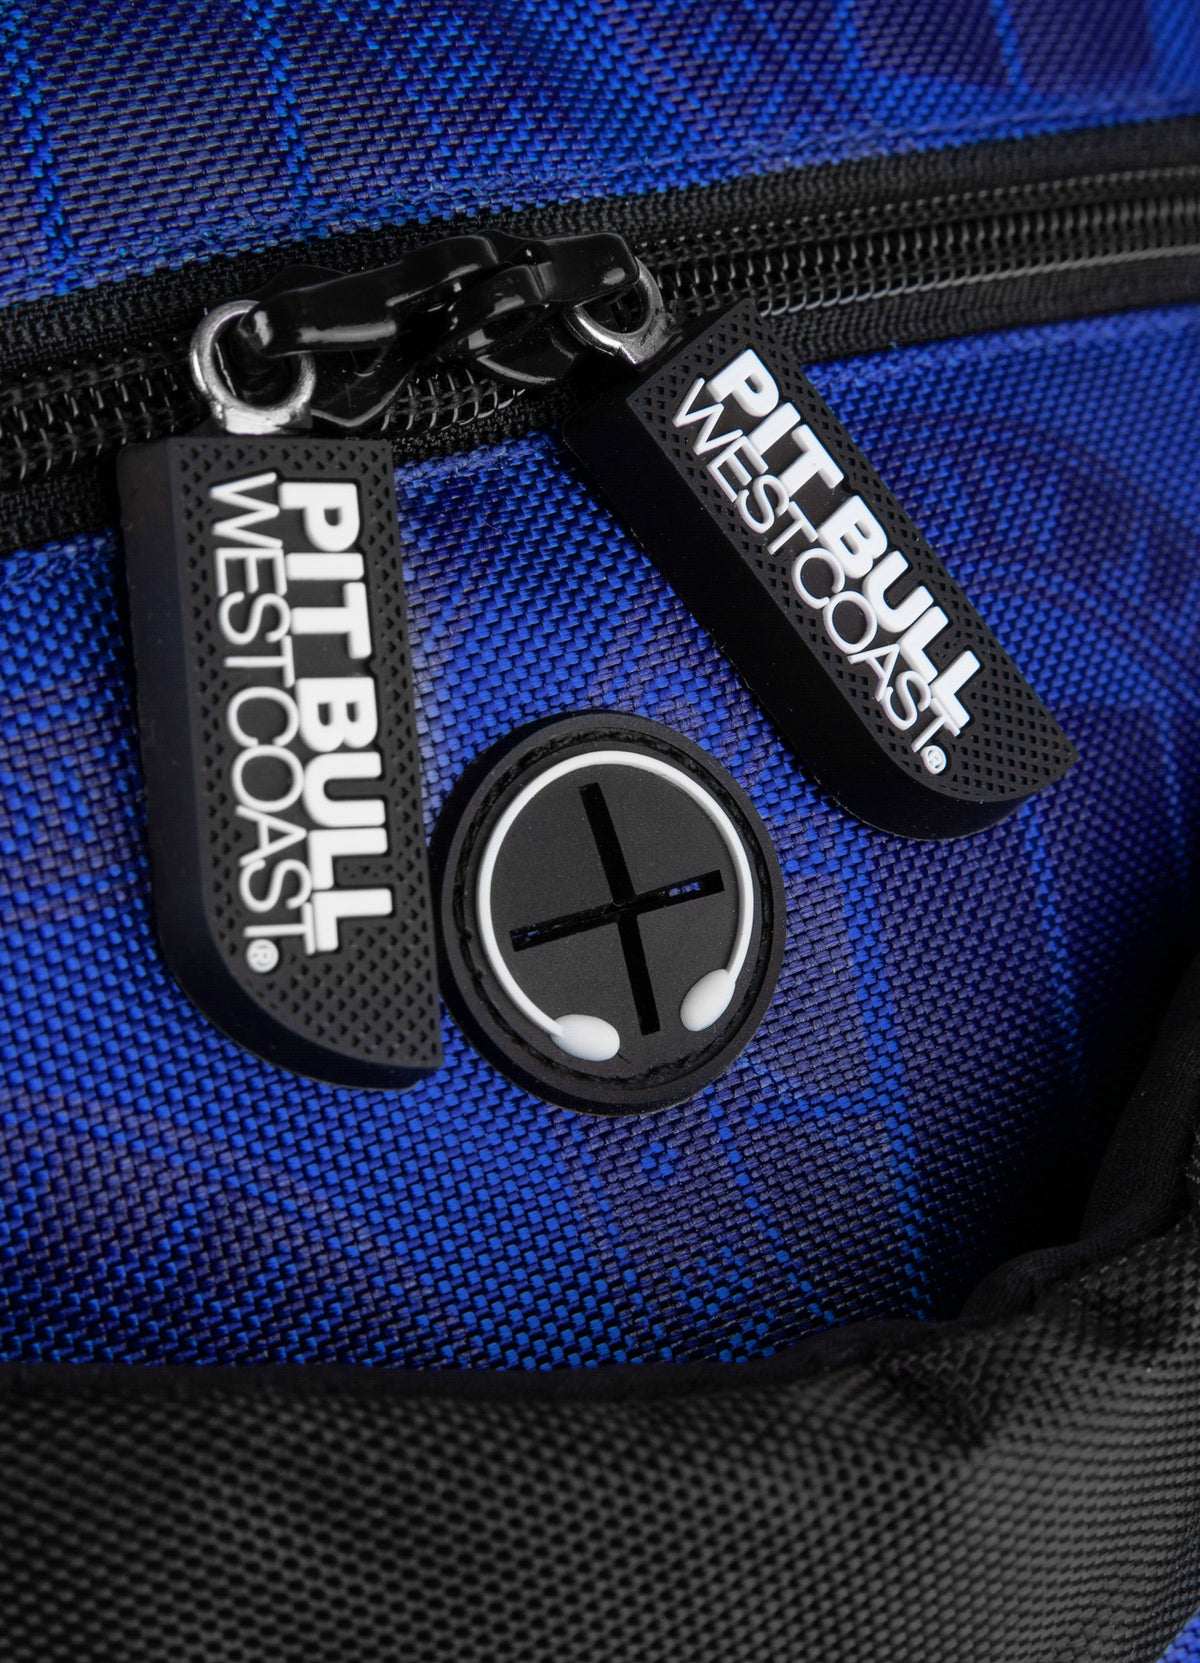 LOGO Blue Medium Training Backpack